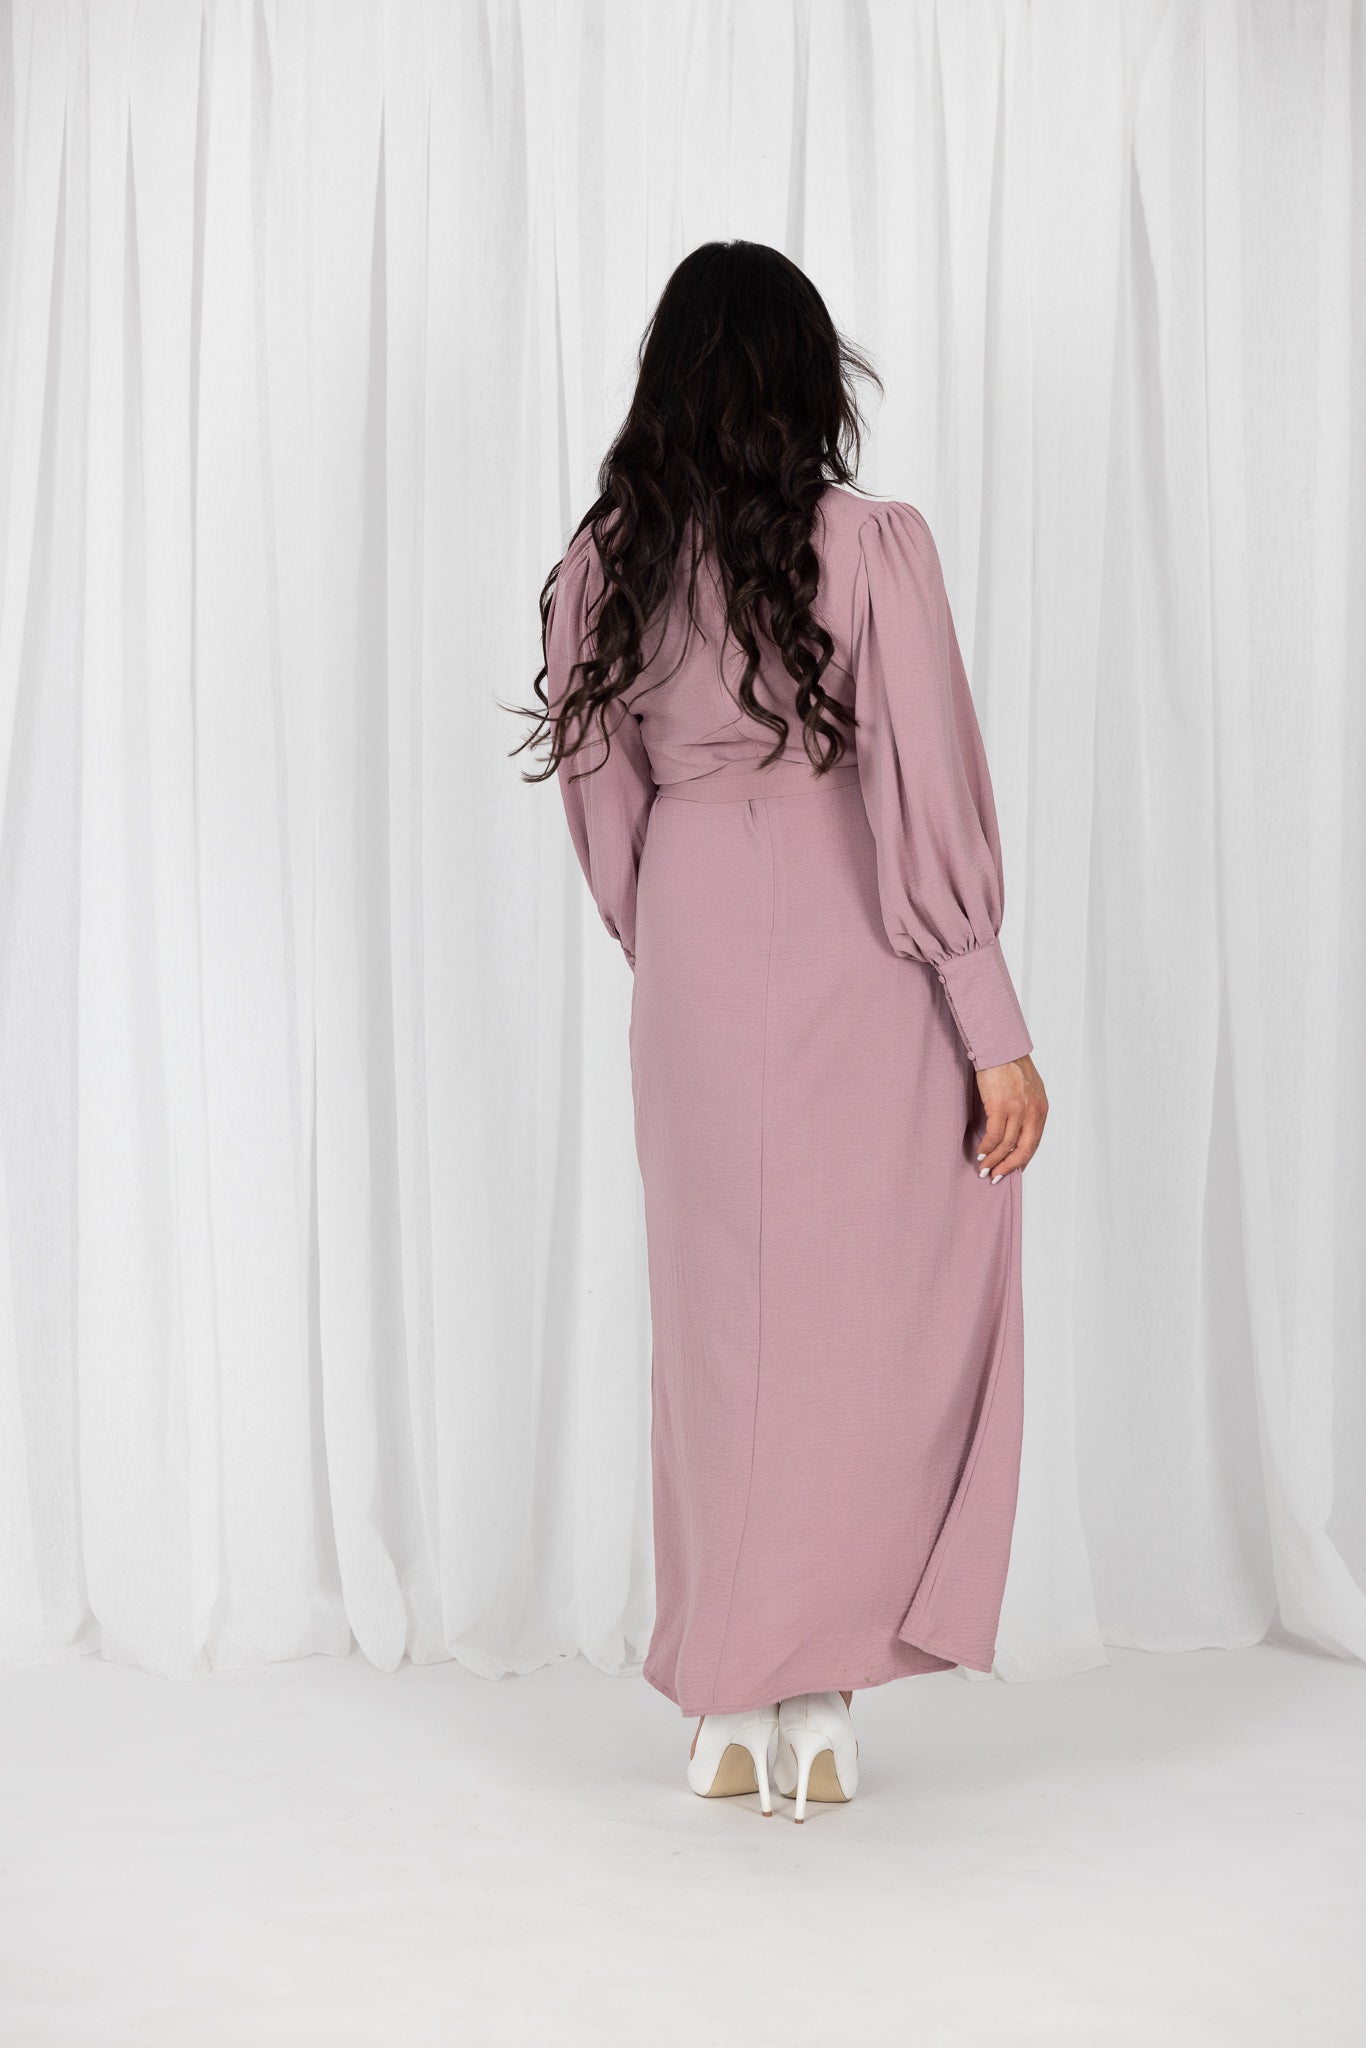 M7990DustyPink-dress-abaya